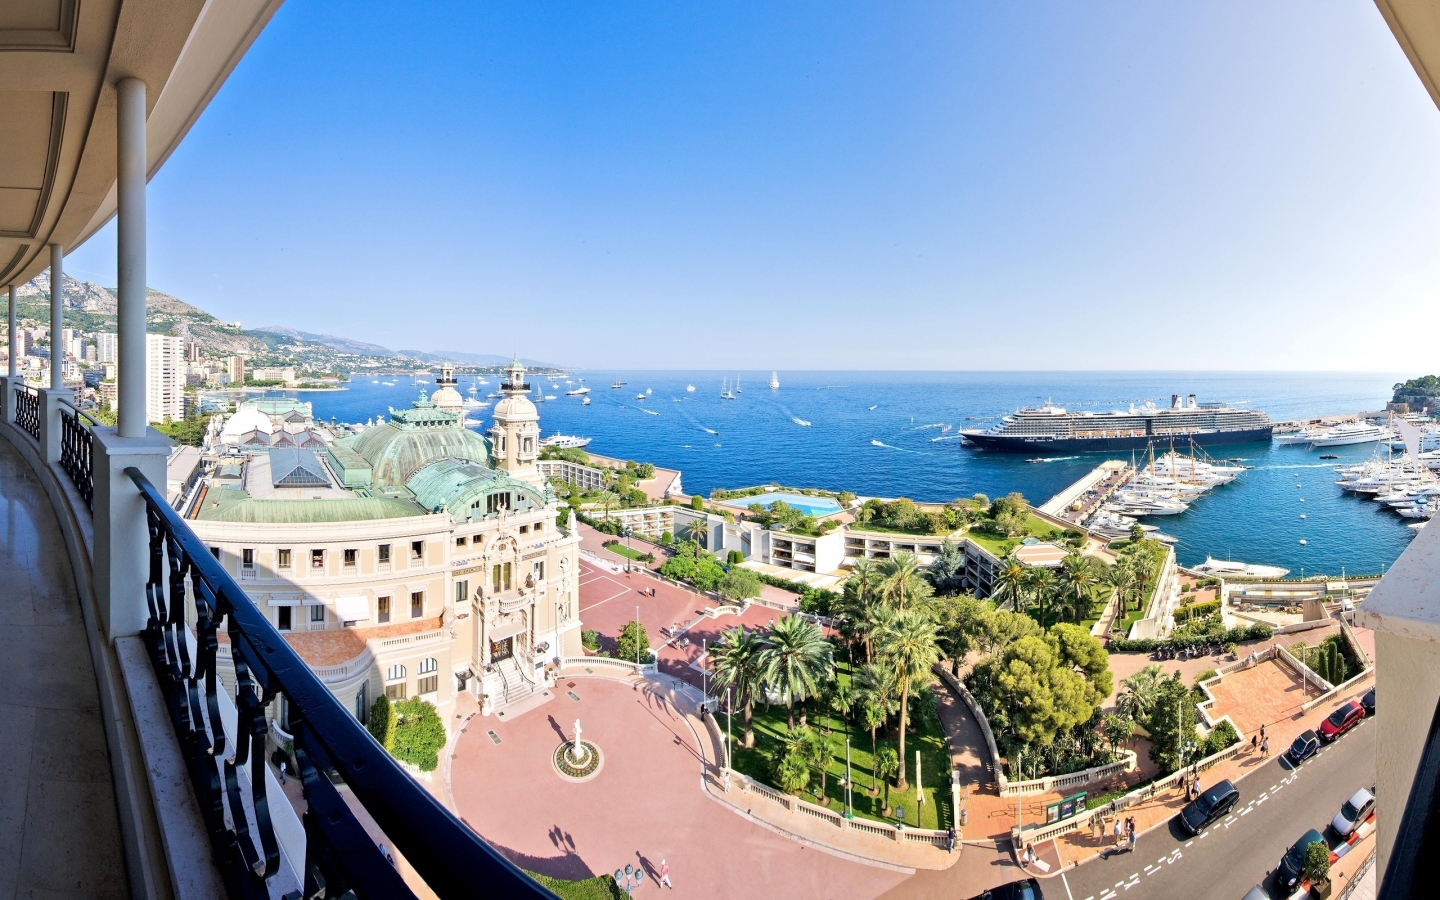 Monaco View for 1440 x 900 widescreen resolution